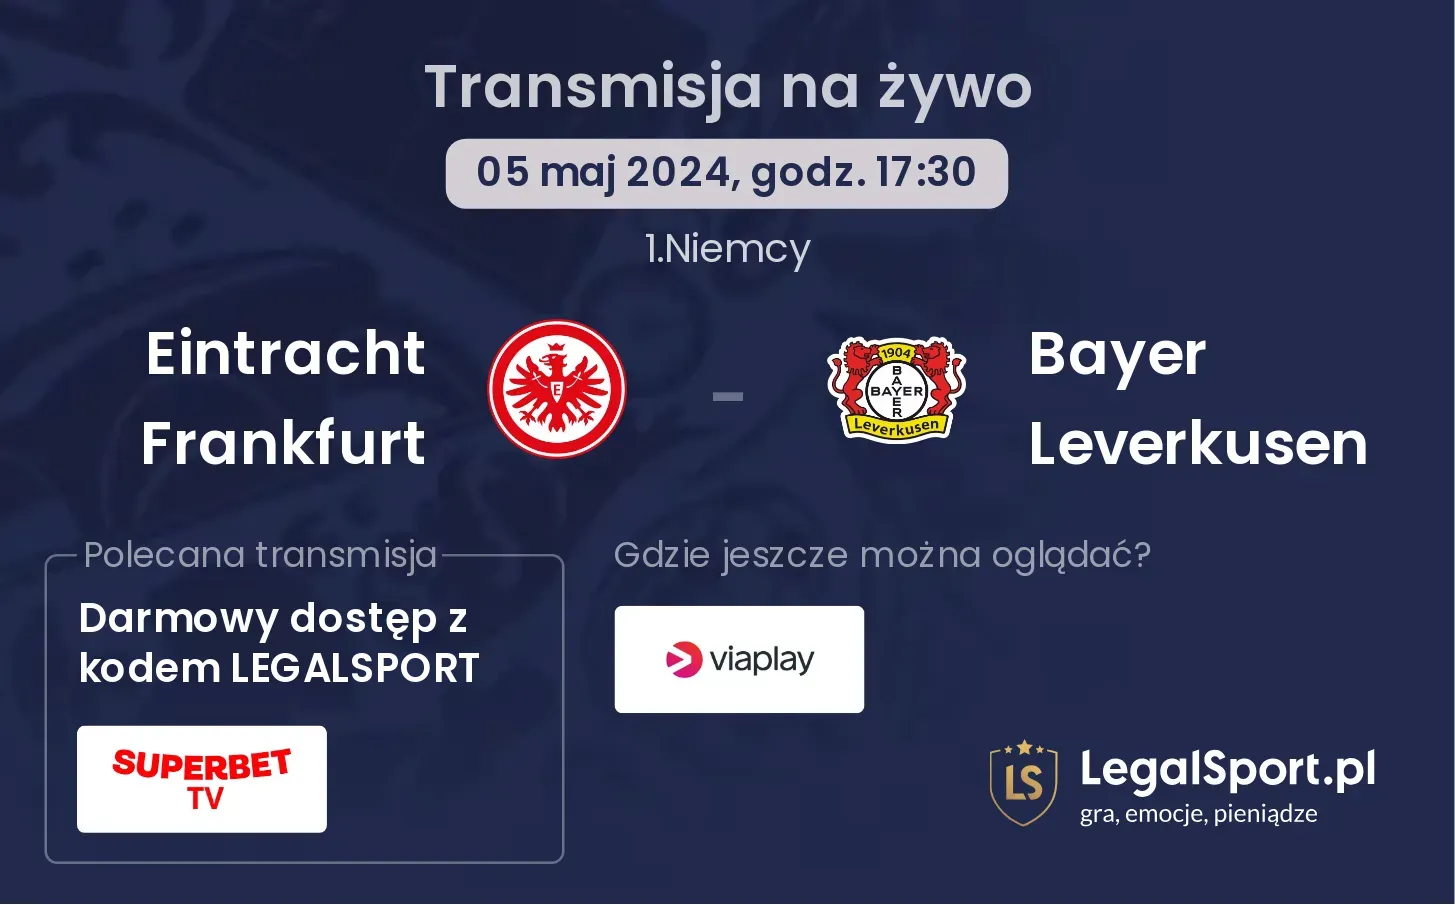 Eintracht Frankfurt - Bayer Leverkusen transmisja na żywo